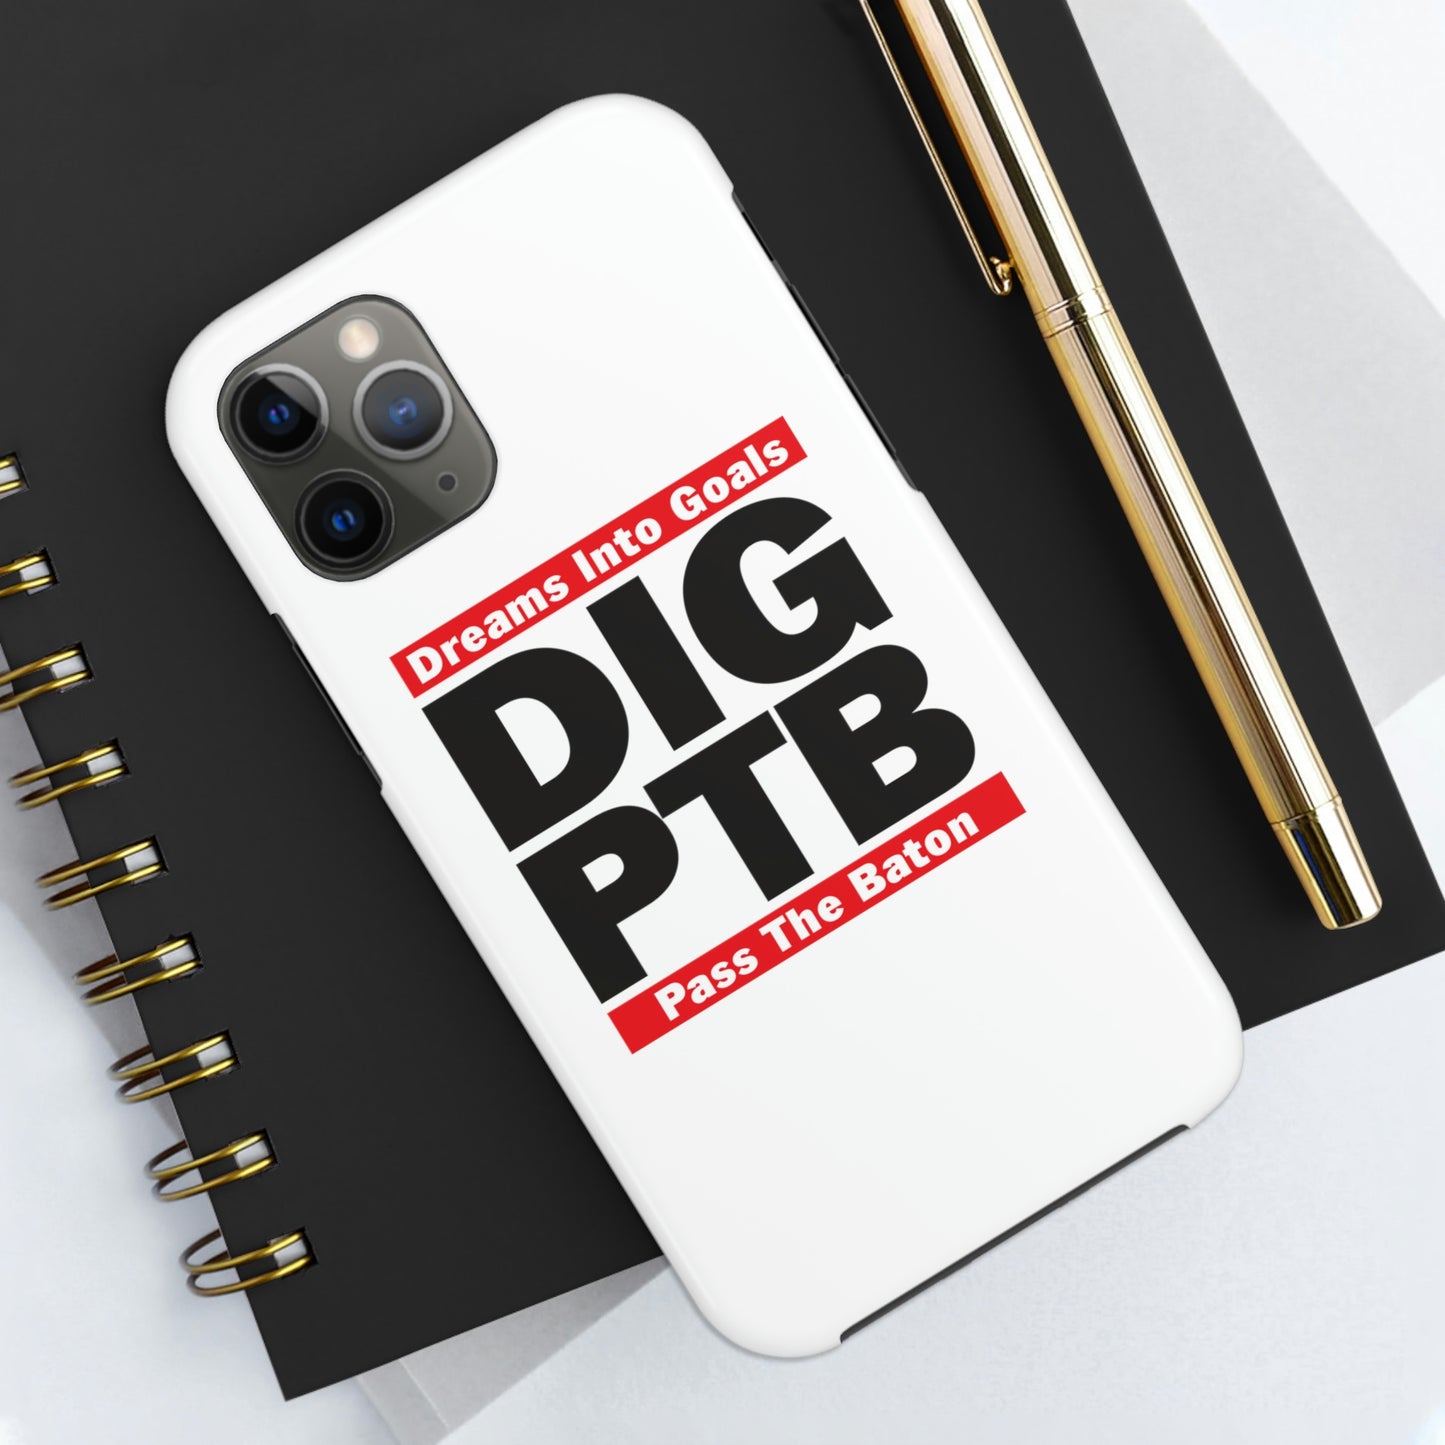 DIG PTB Tough Phone Cases, Case-Mate